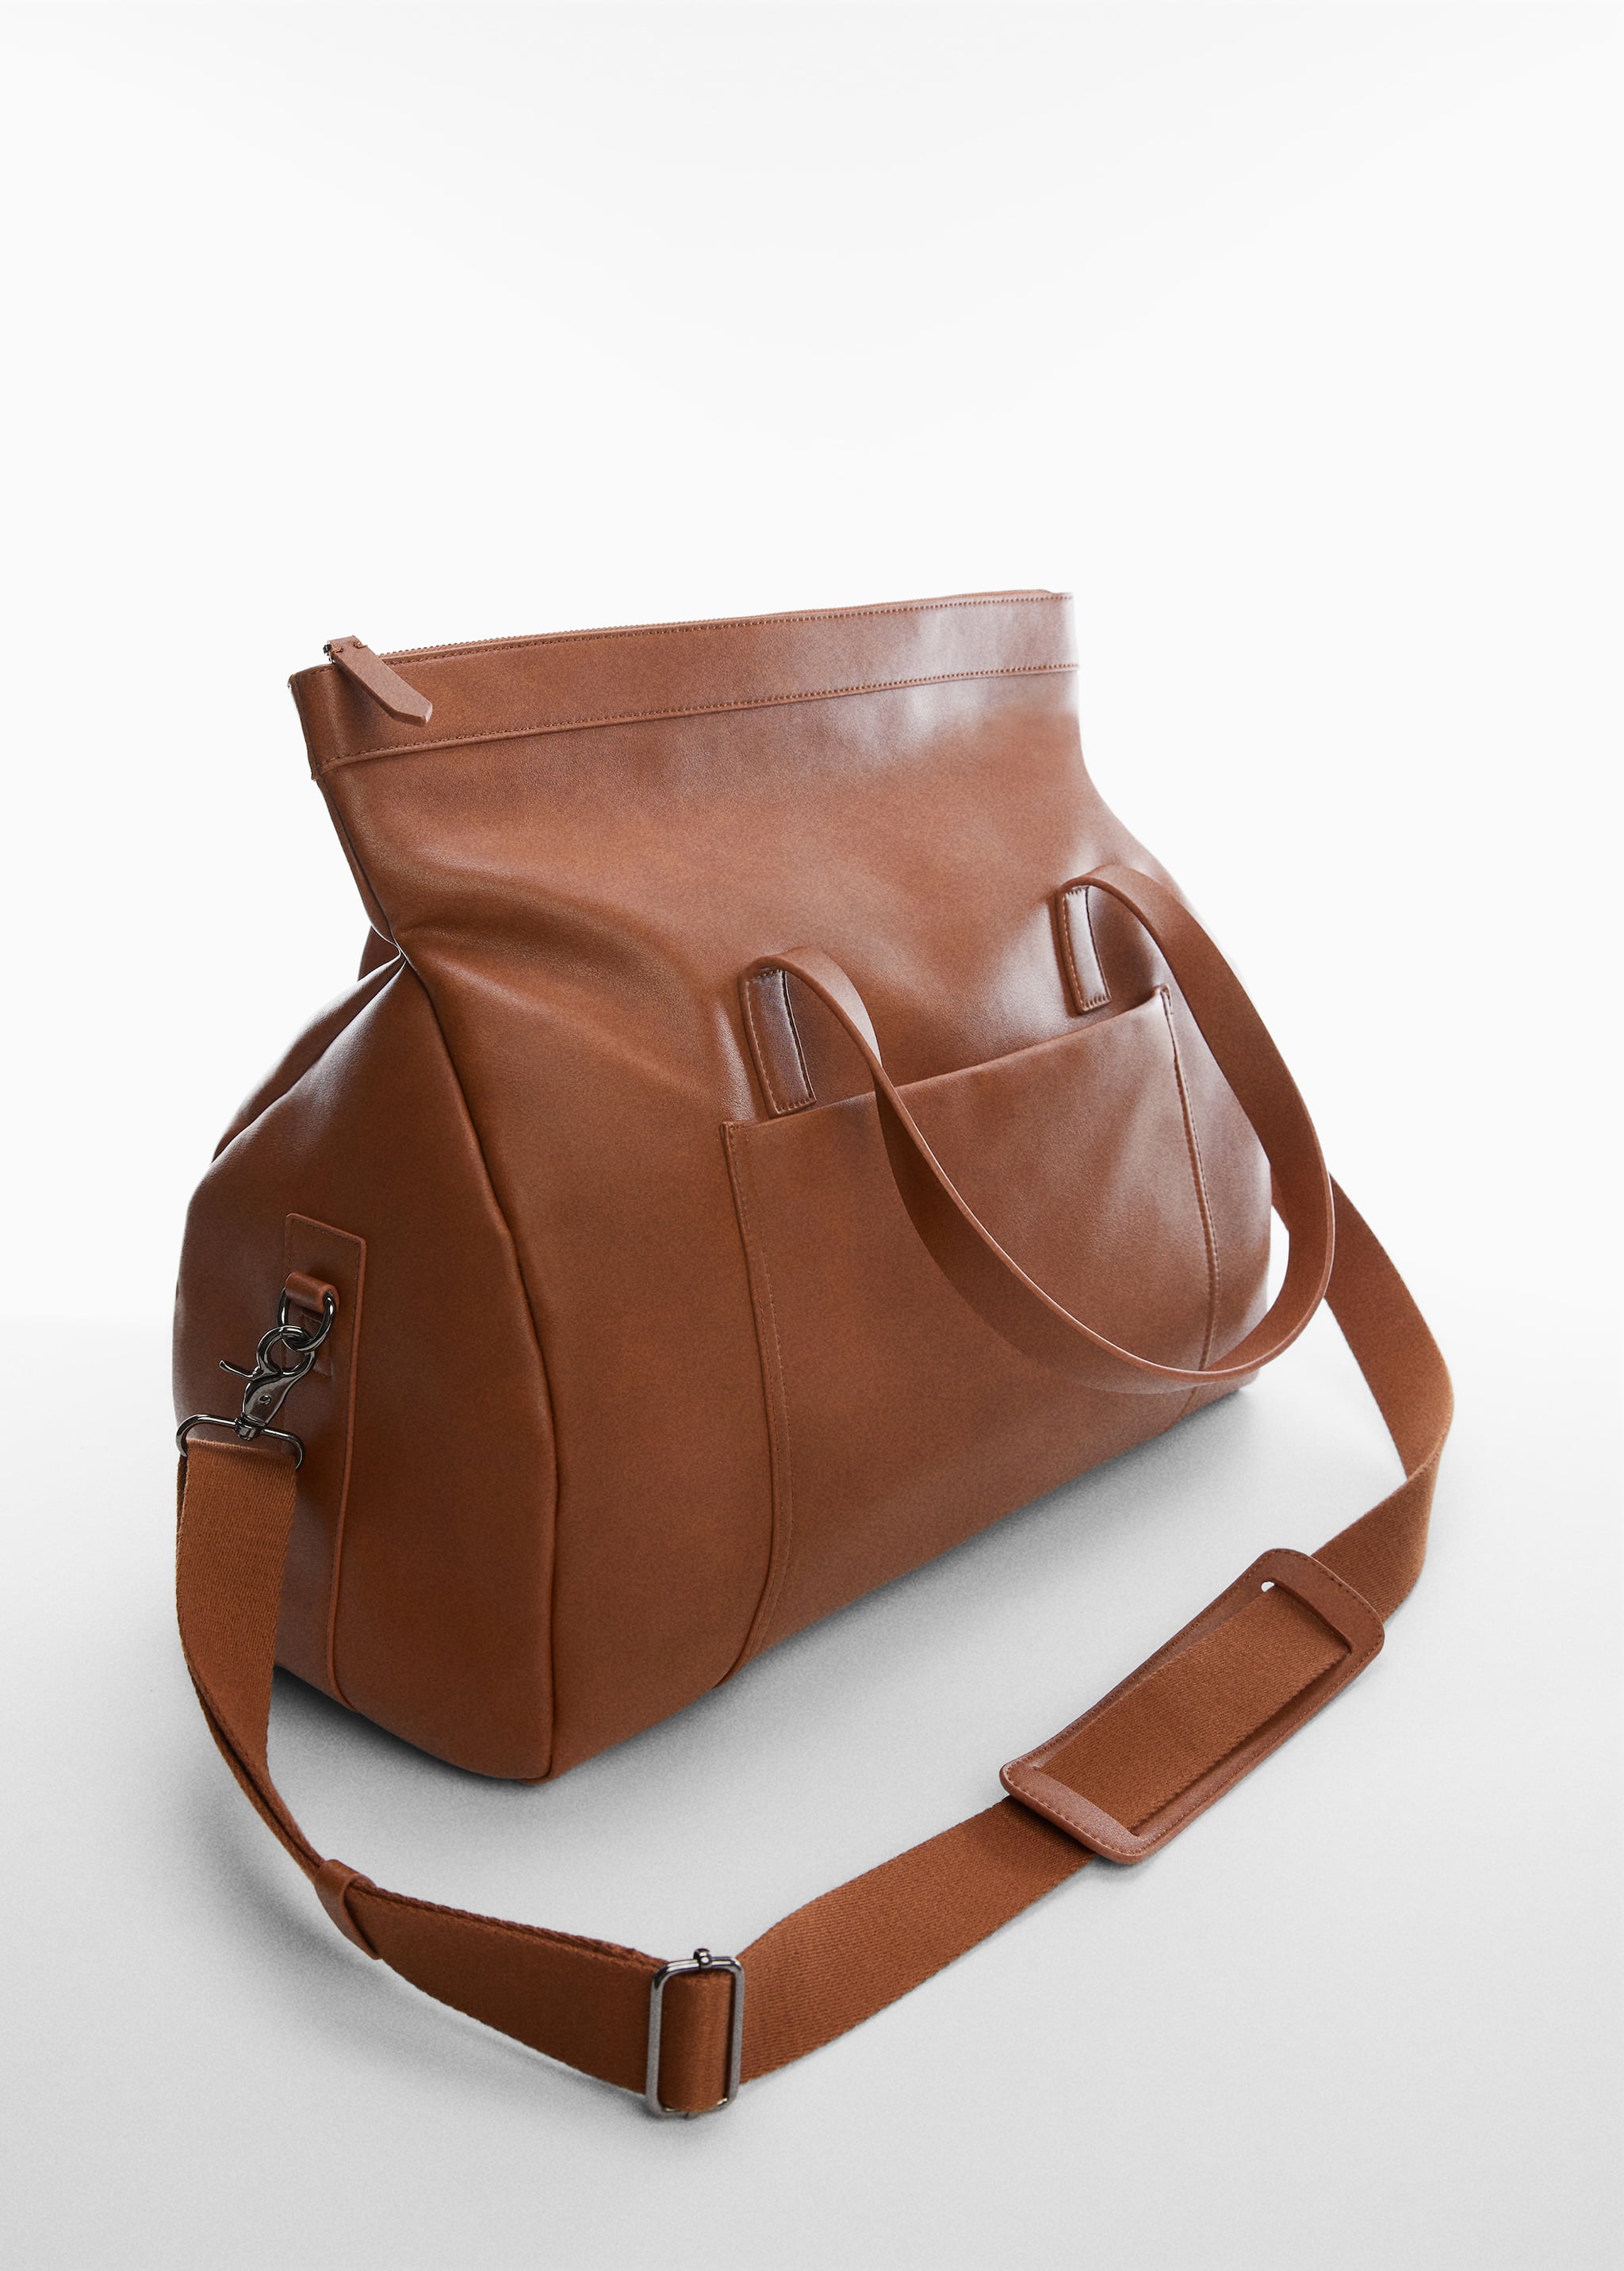 Leather travel bag - Medium plane